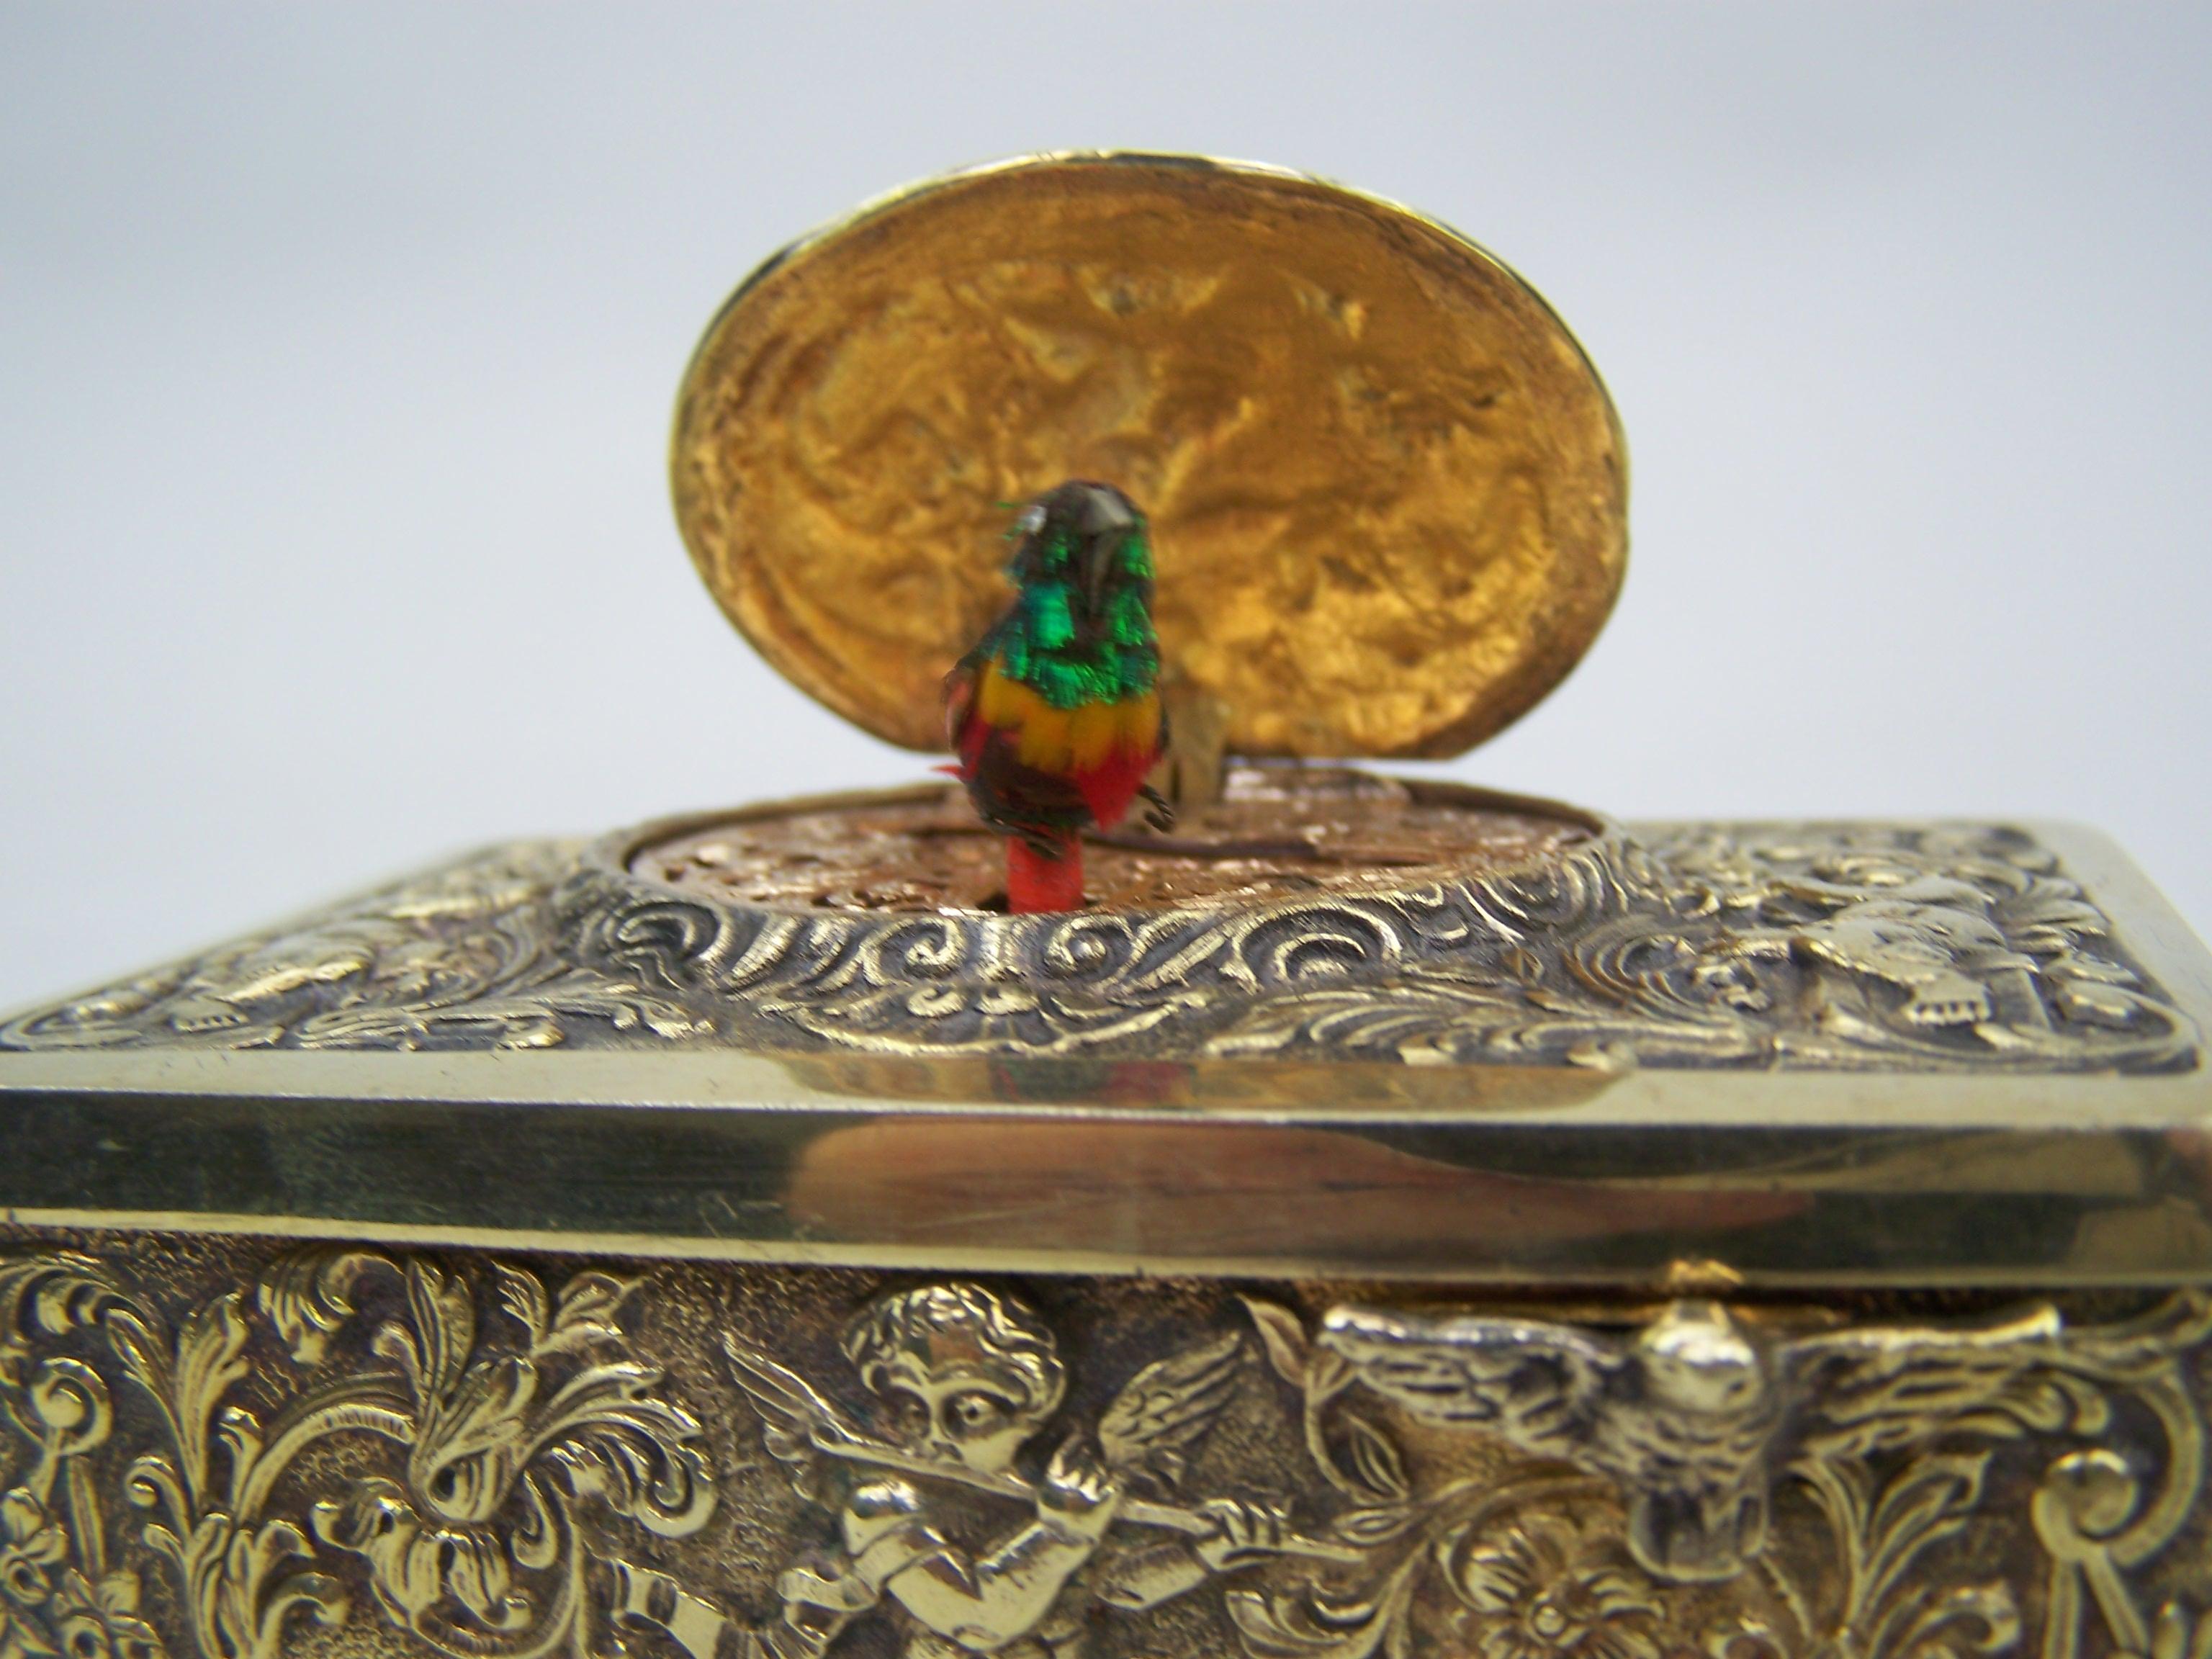 20th Century Singing bird box by K Griesbaum in guilded case